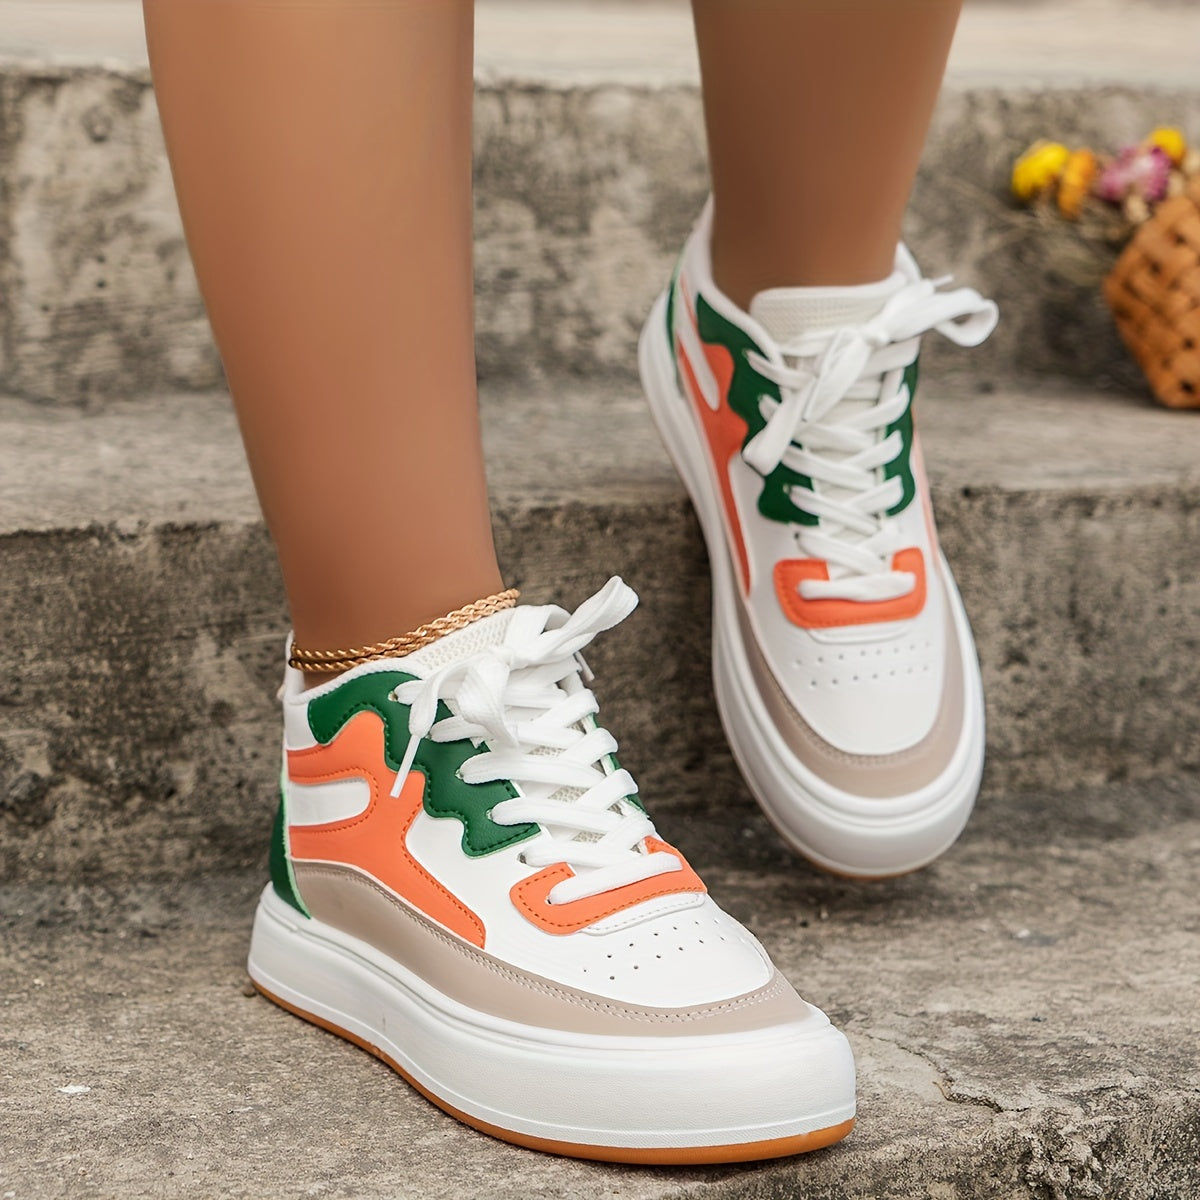 Colorblock-Skateschuhe Für Damen, Lässige High-Top-Outdoor-Schuhe, Bequeme Schnür-Sneaker